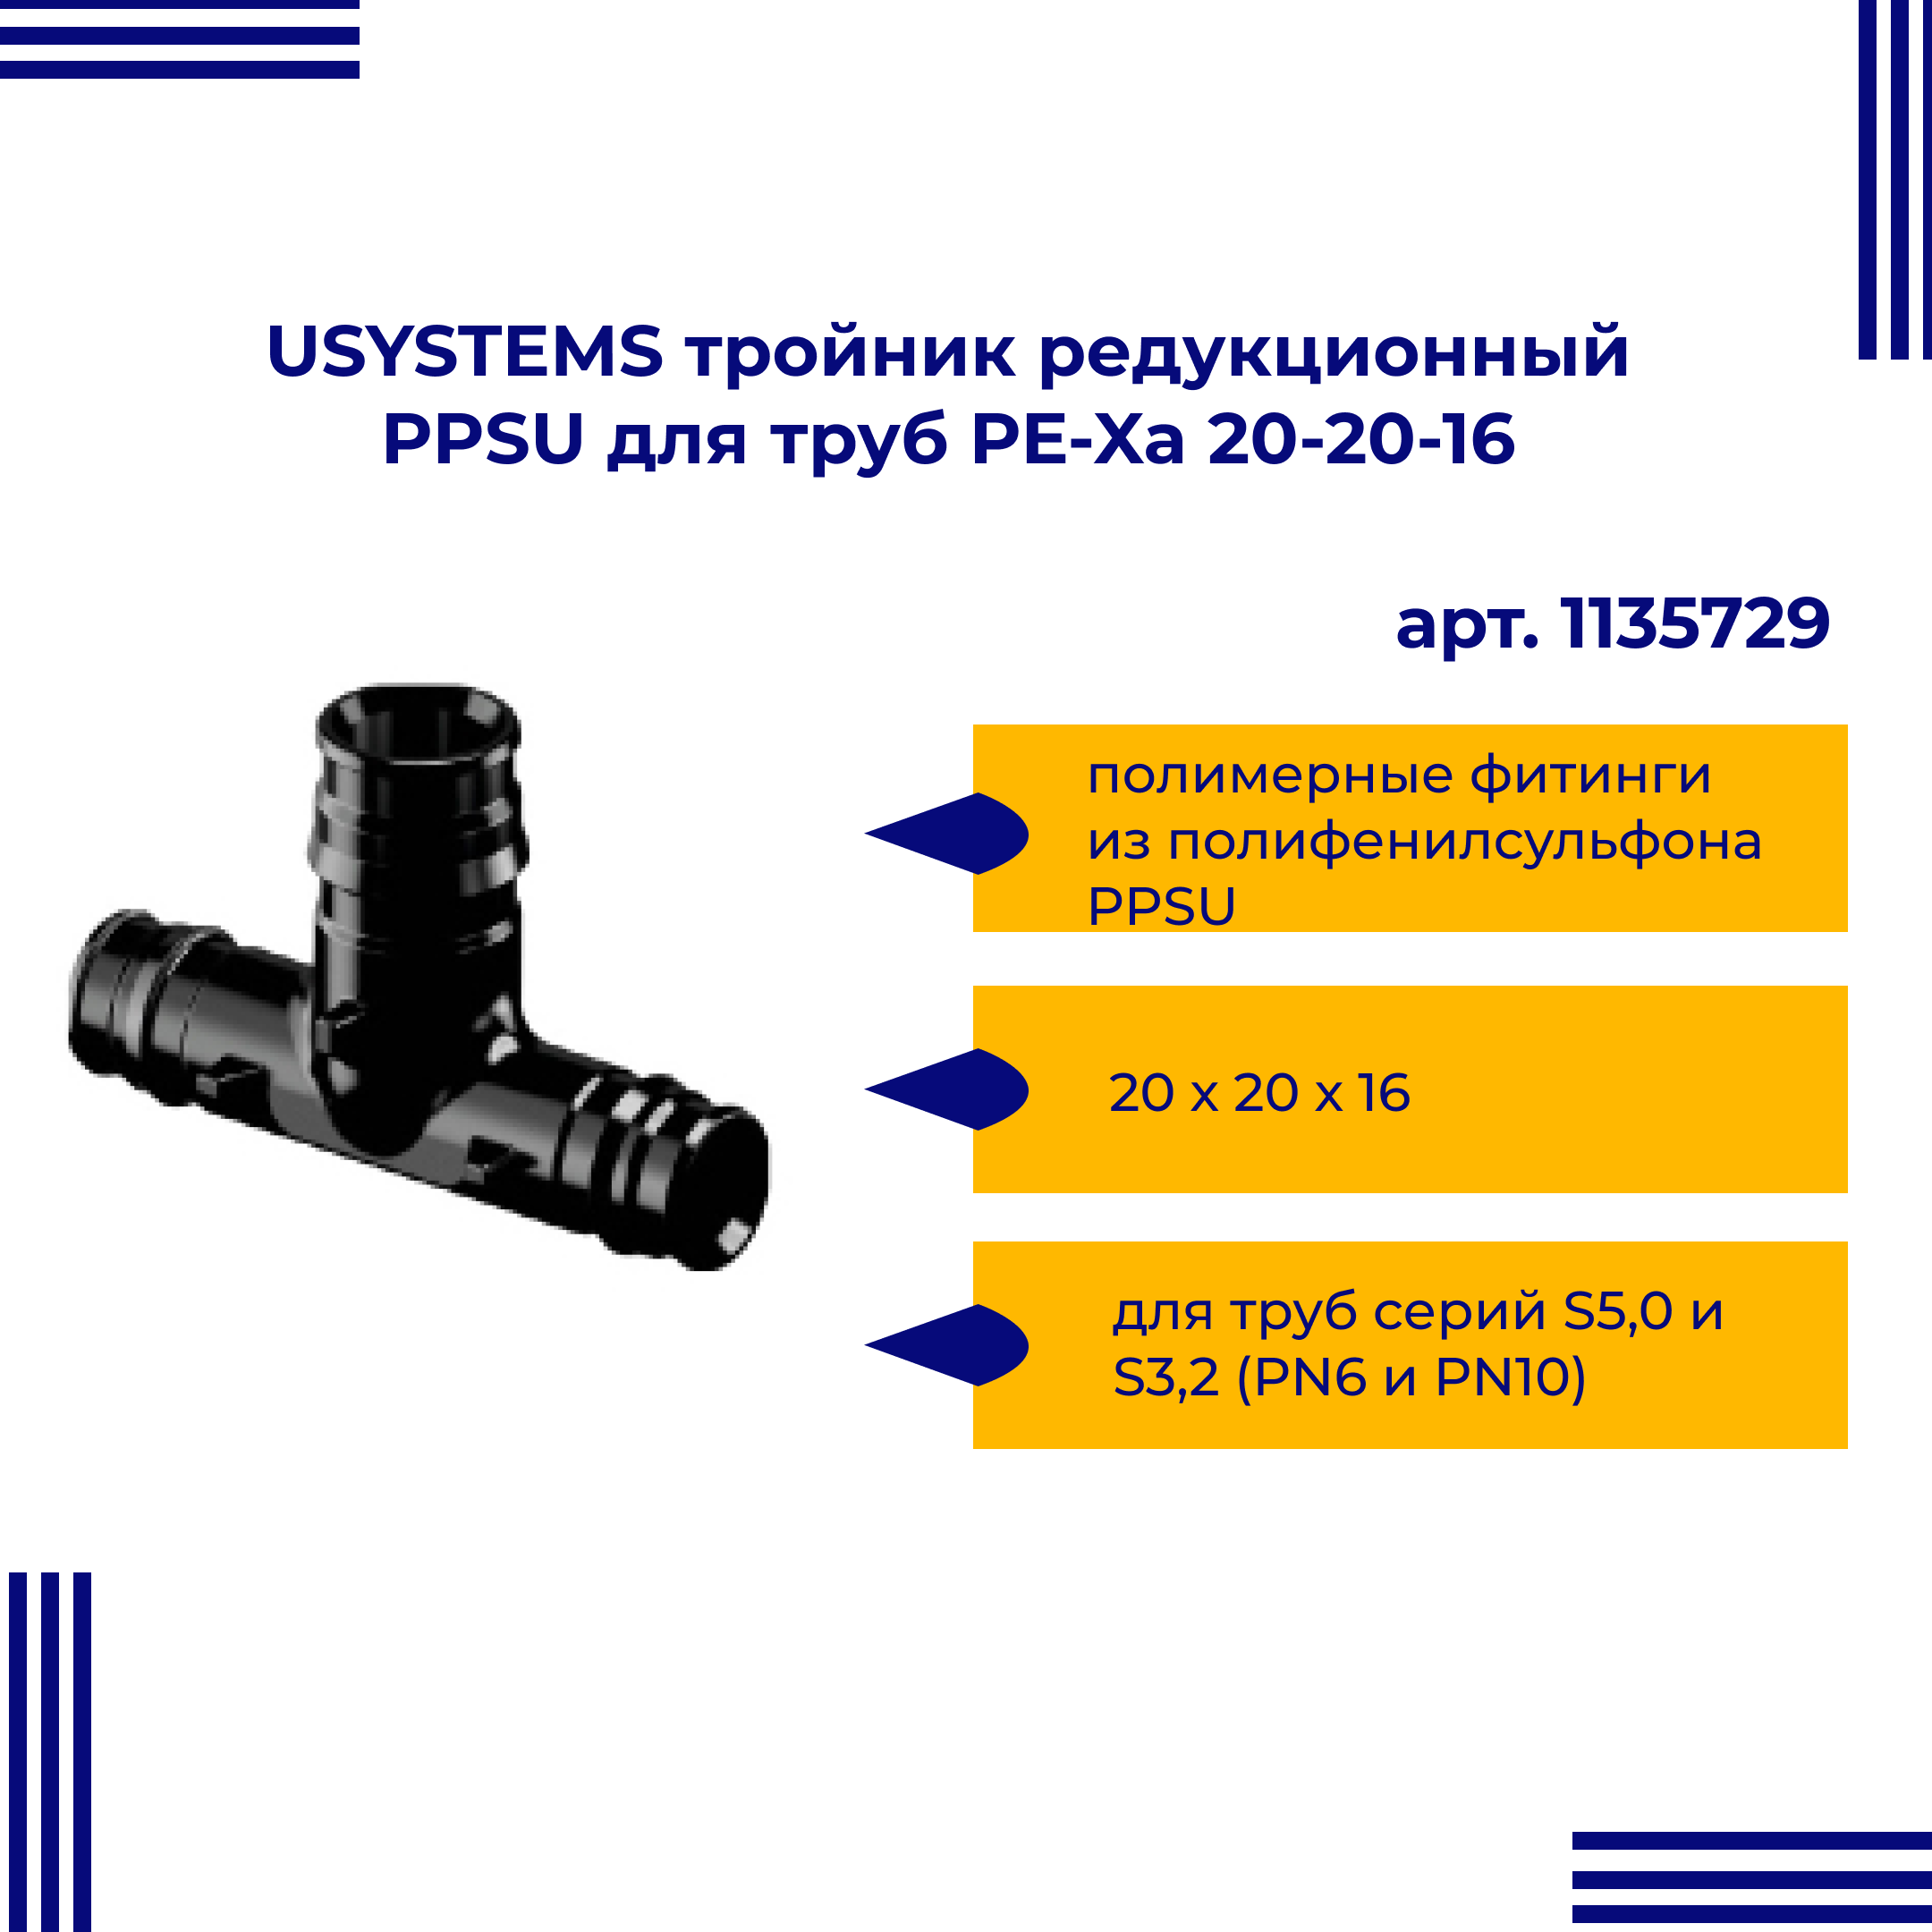 Тройник PPSU USYSTEMS редукционный для труб PE-Xa 20-20-16 1135729